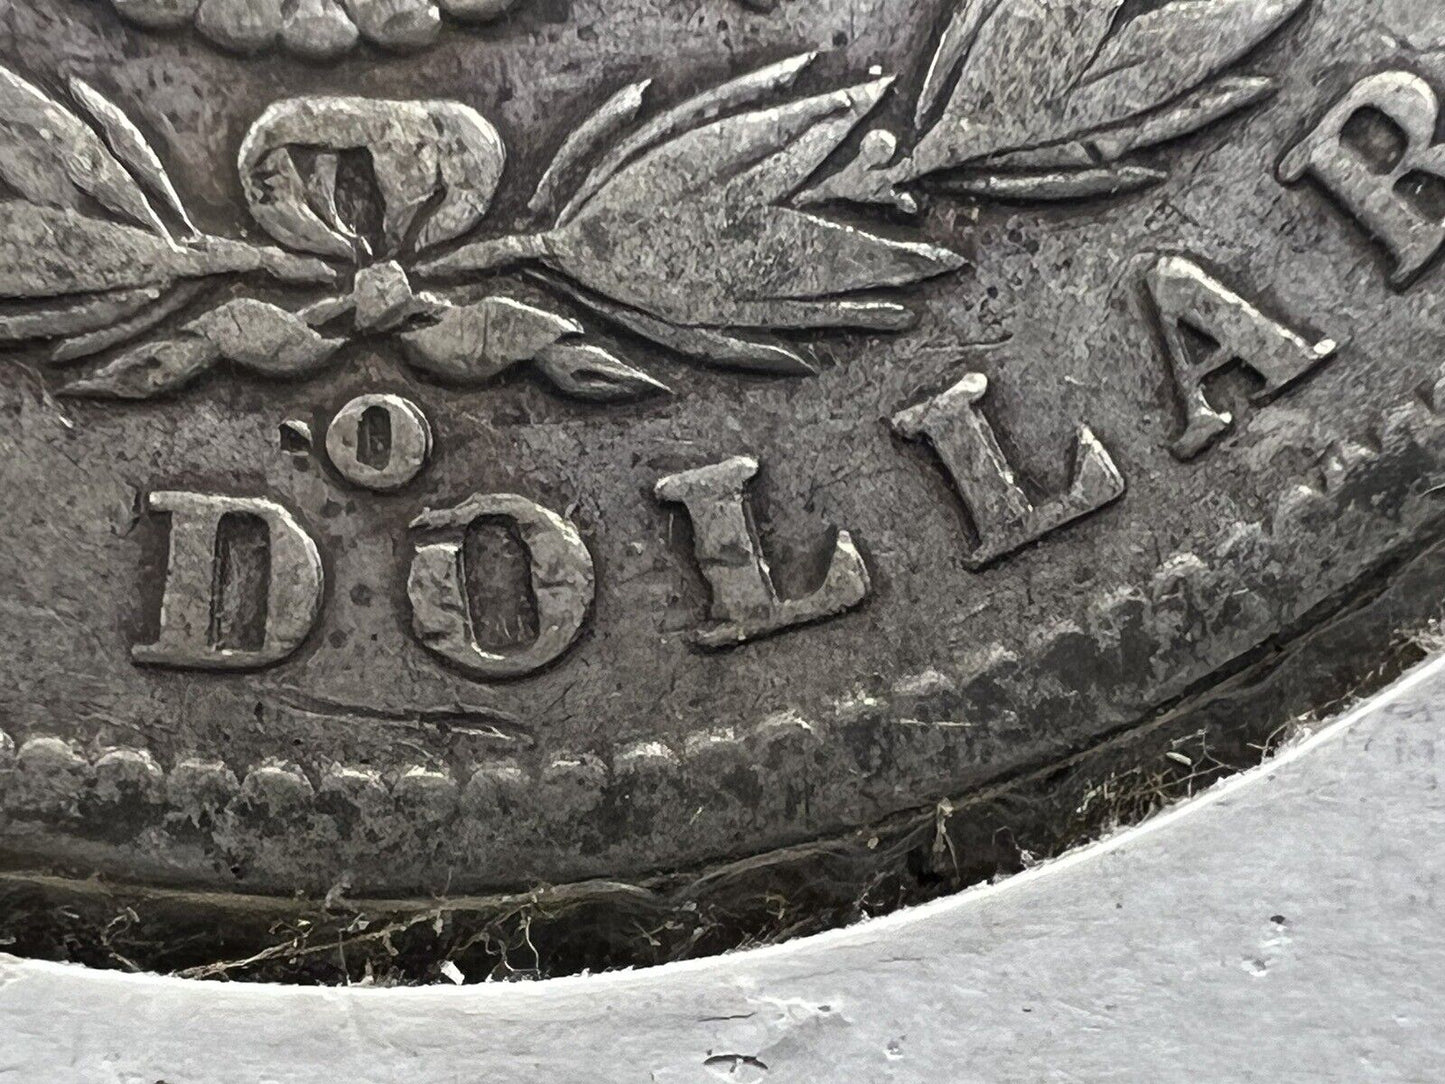 1899 O Morgan Silver Dollar VAM 26 Variety Double Die Reverse VF Details Glue